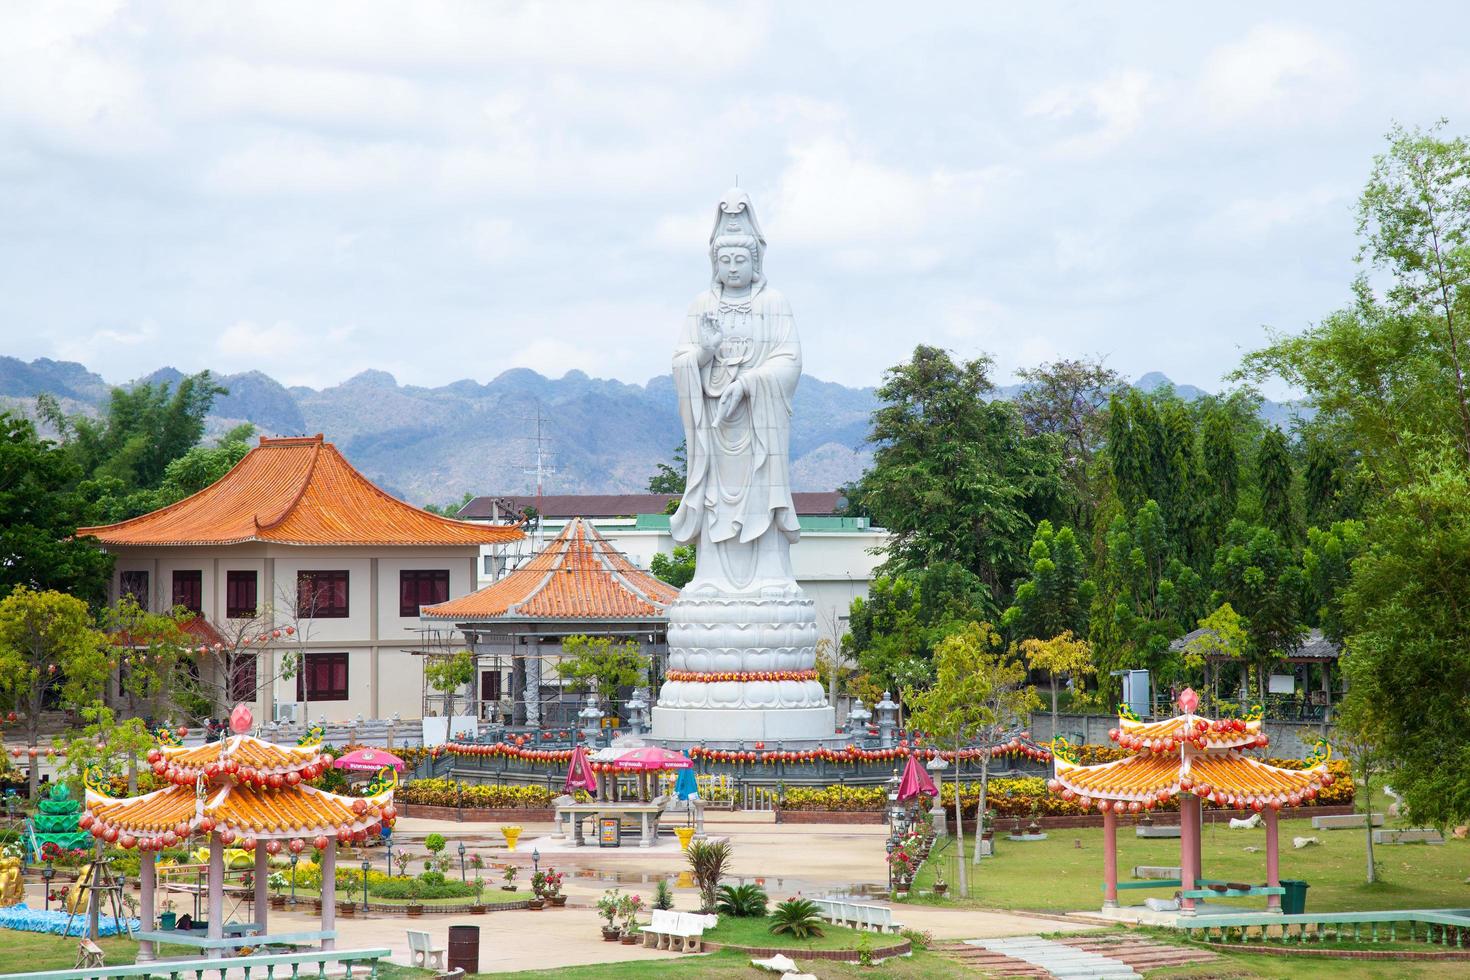 Guan Yin statue in Thailand photo